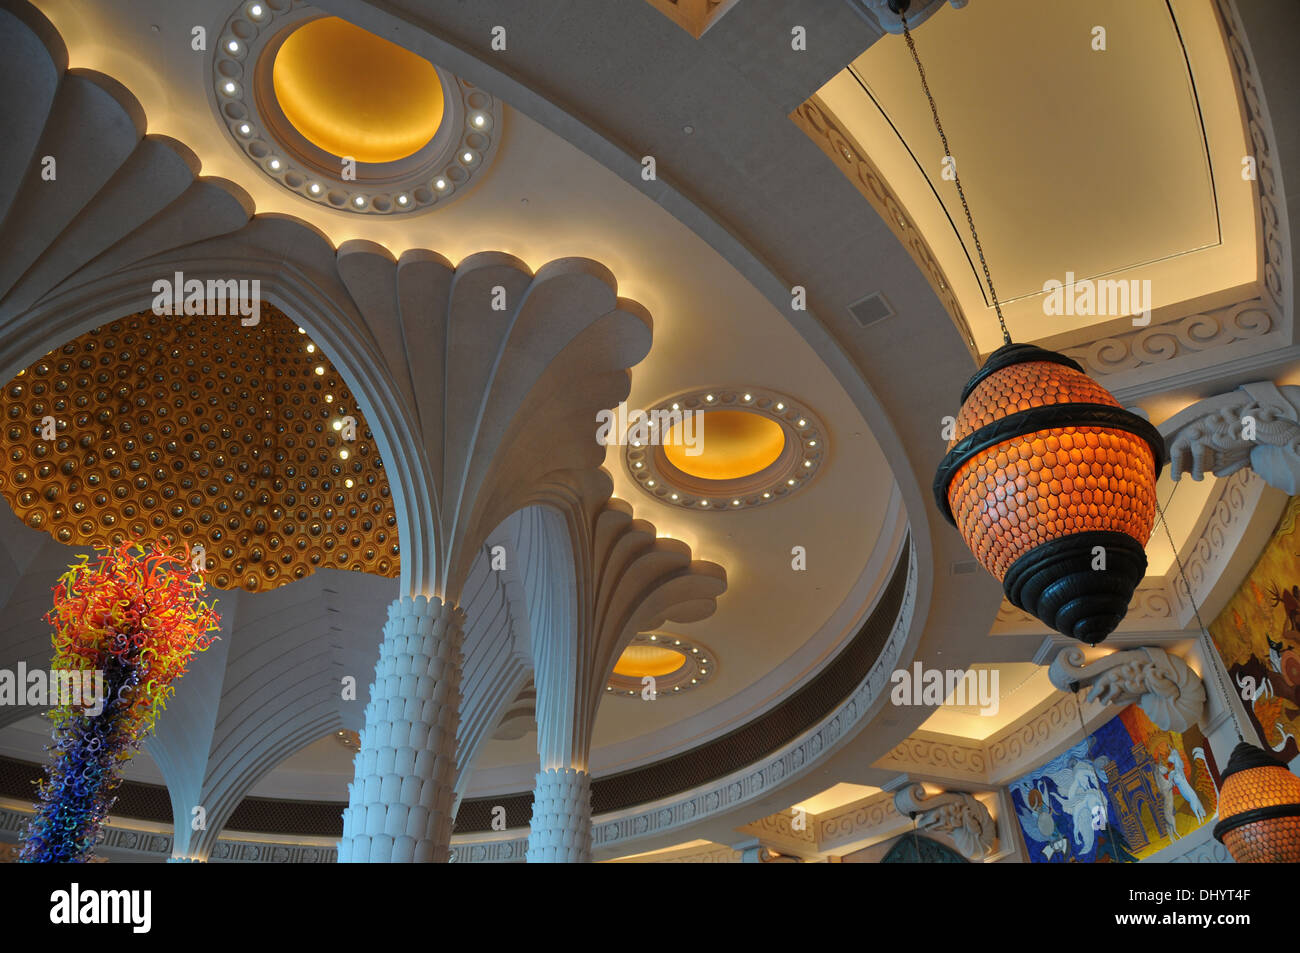 The Lobby, Atlantis The Palm, Dubai, United Arab Emirates. Stock Photo